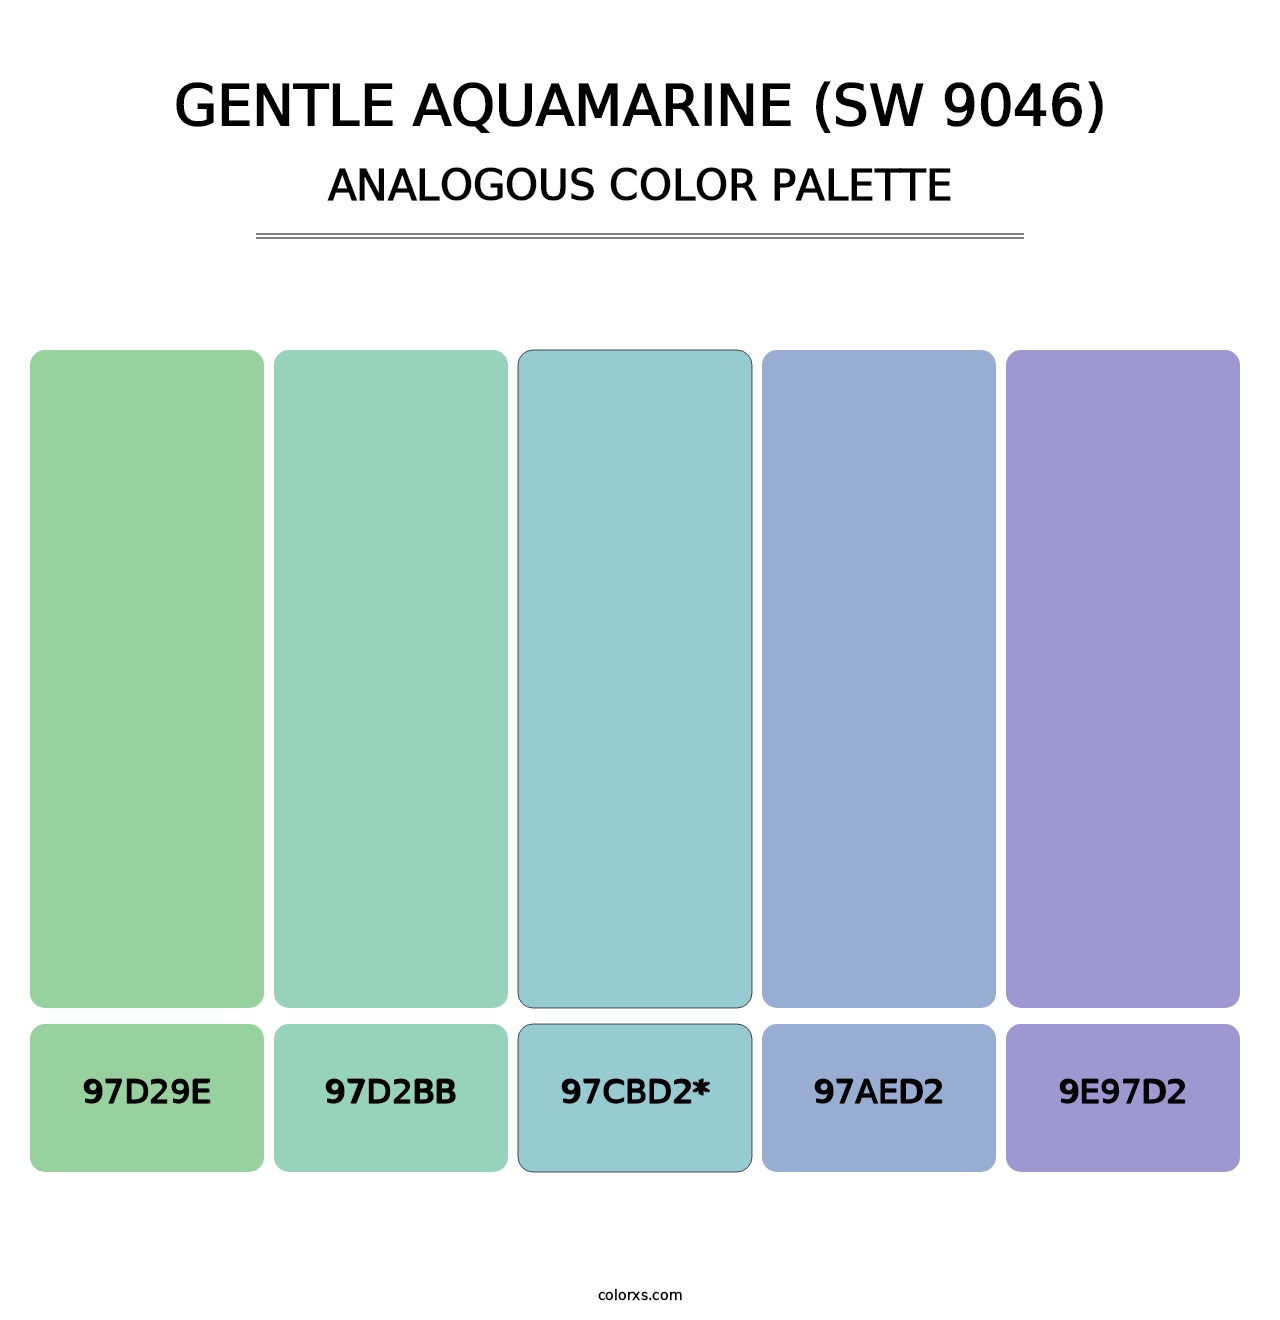 Gentle Aquamarine (SW 9046) - Analogous Color Palette